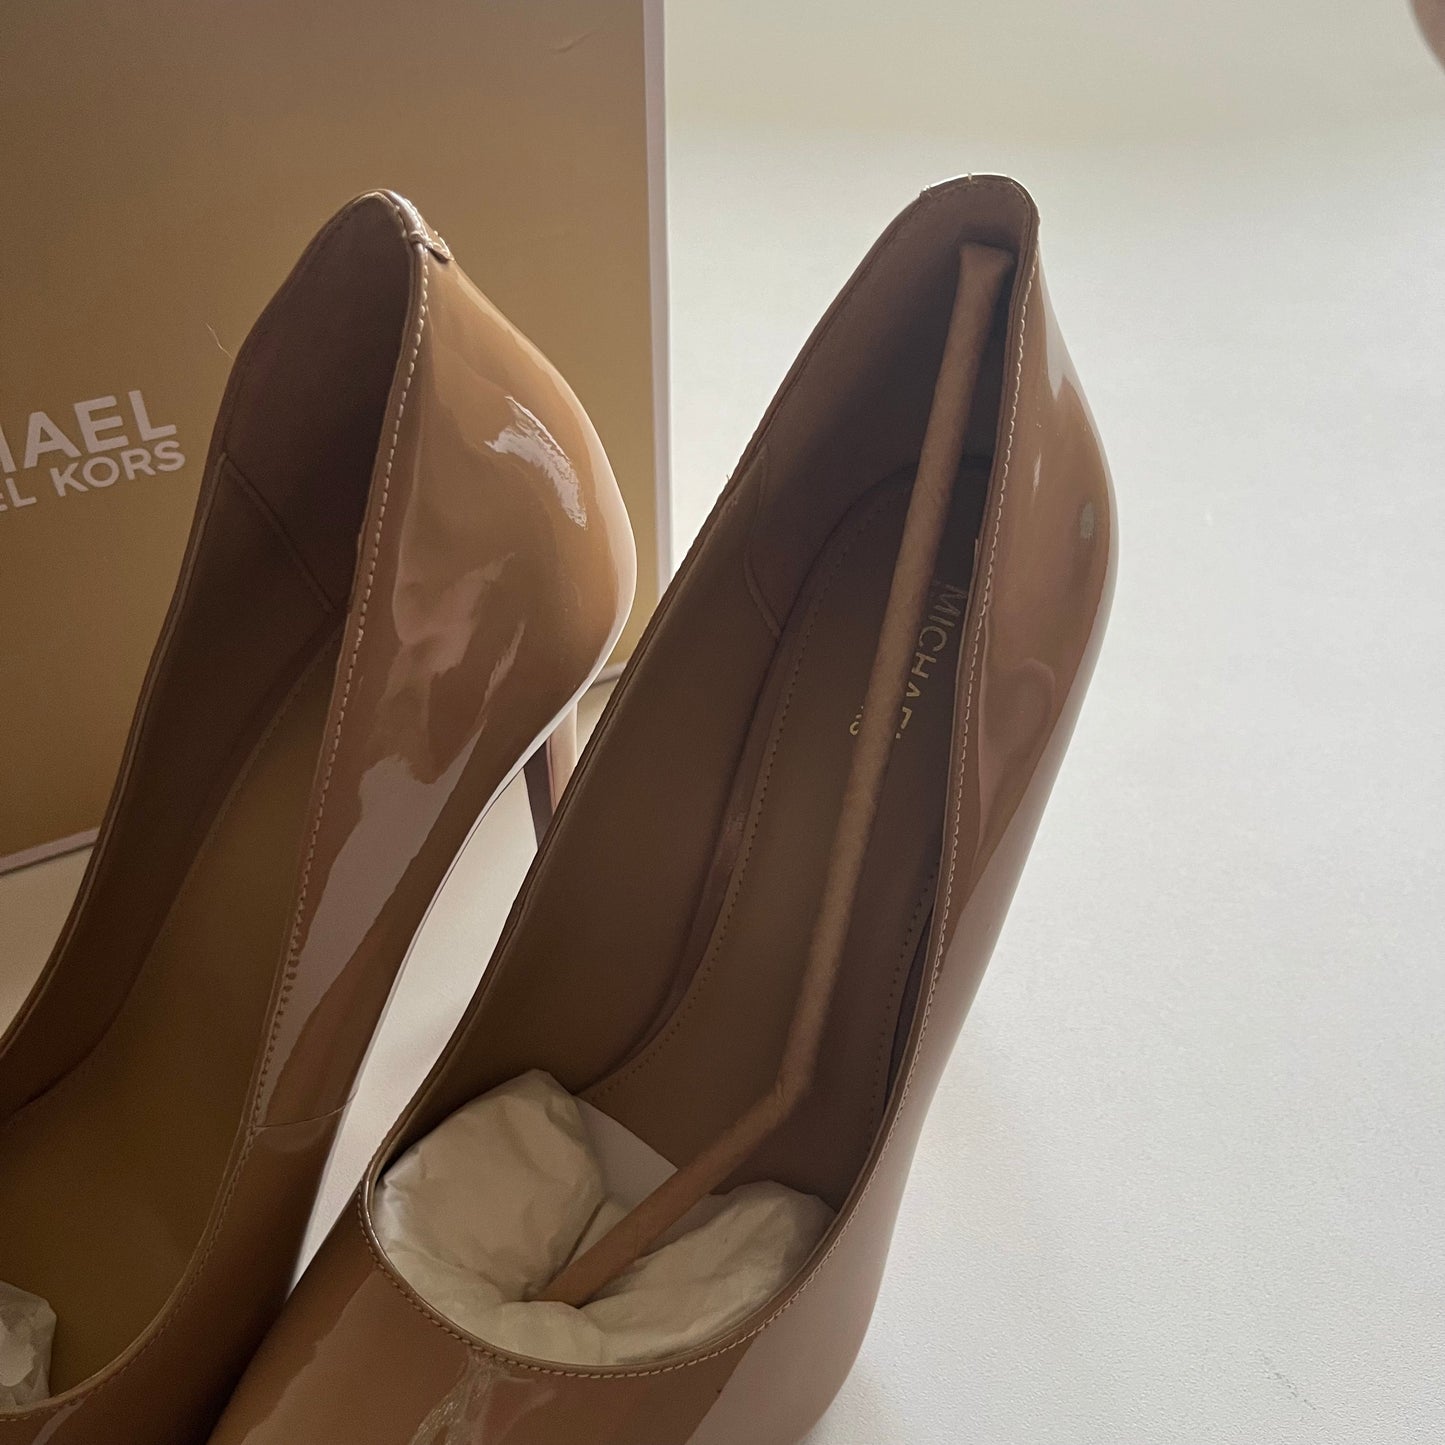 Tan Shoes Heels Stiletto Michael Kors, Size 9.5